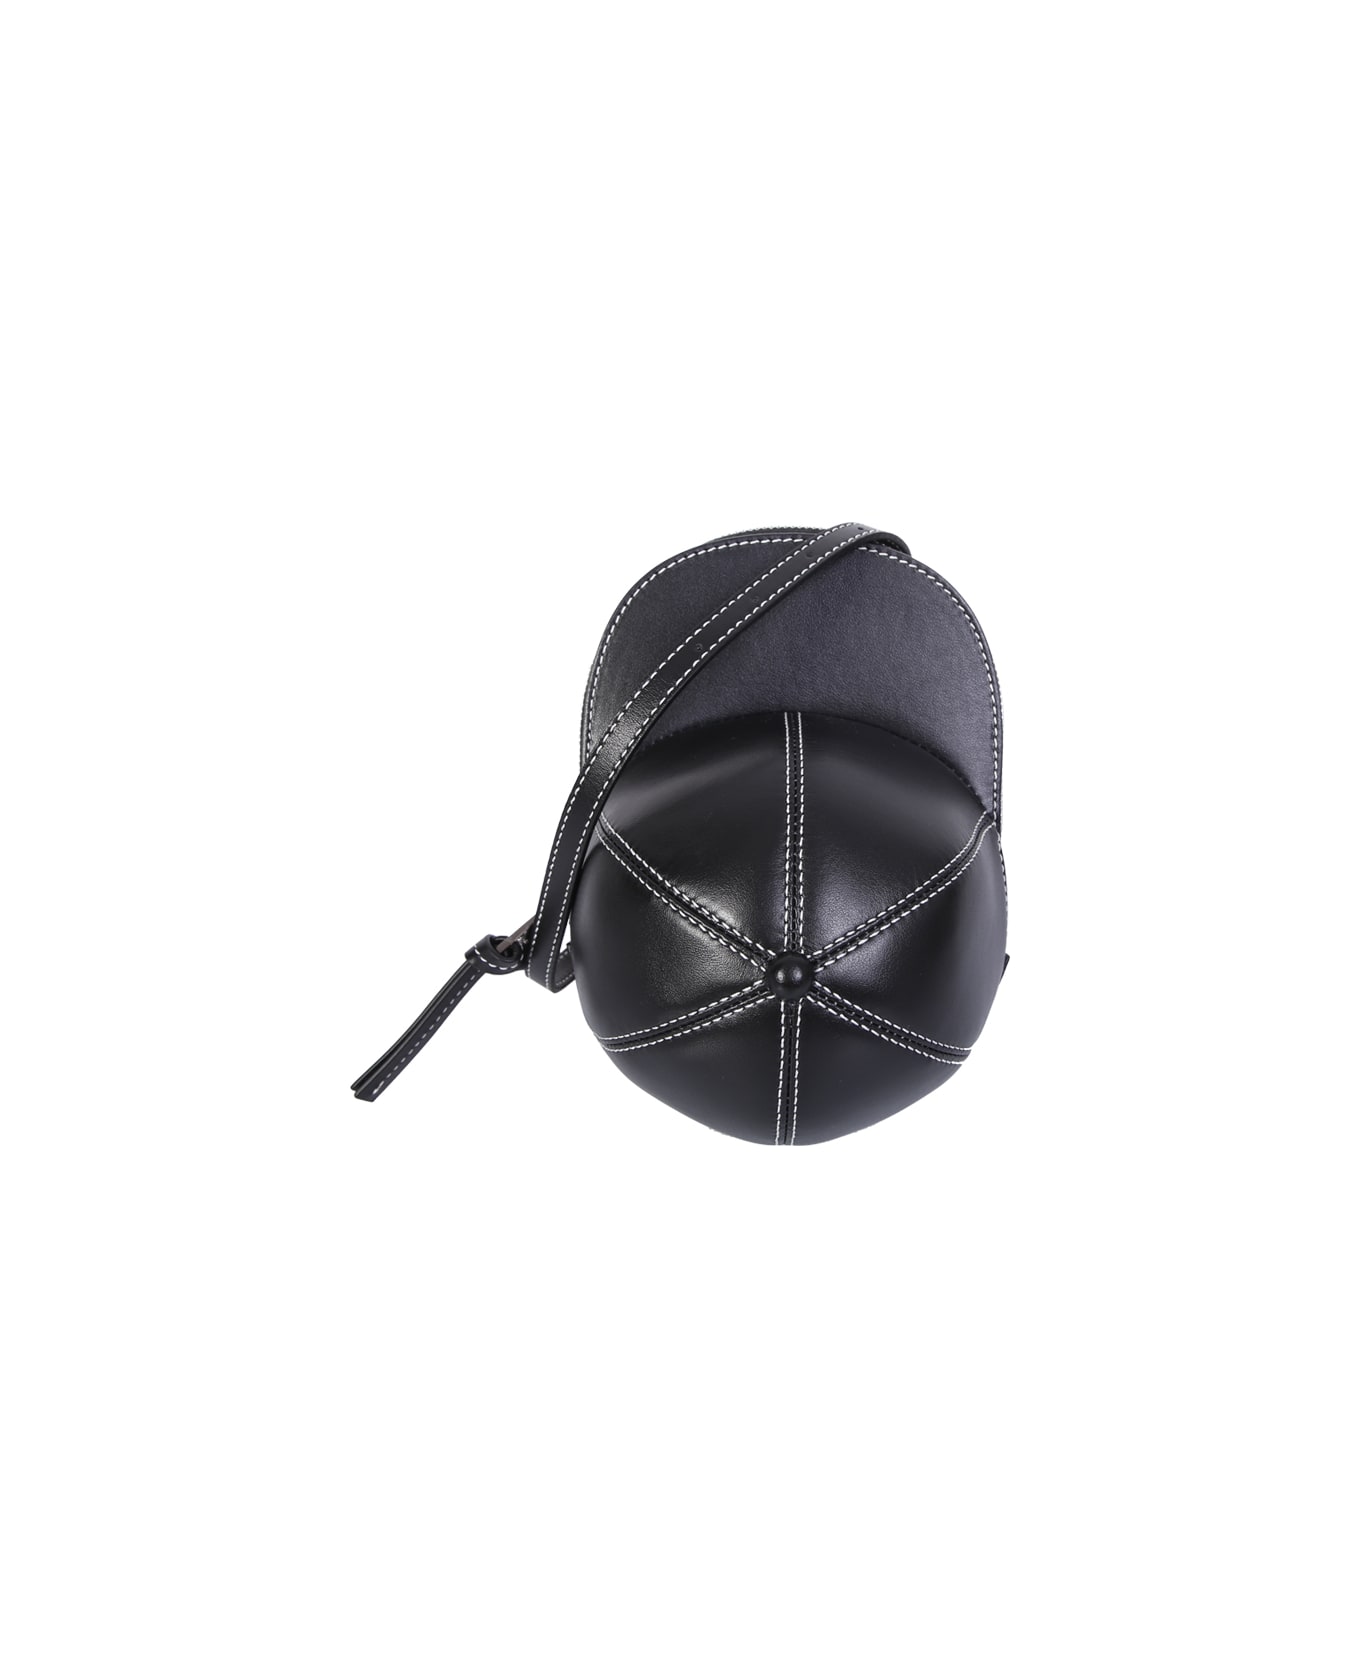 J.W. Anderson Black Cap Midi Bag - Black